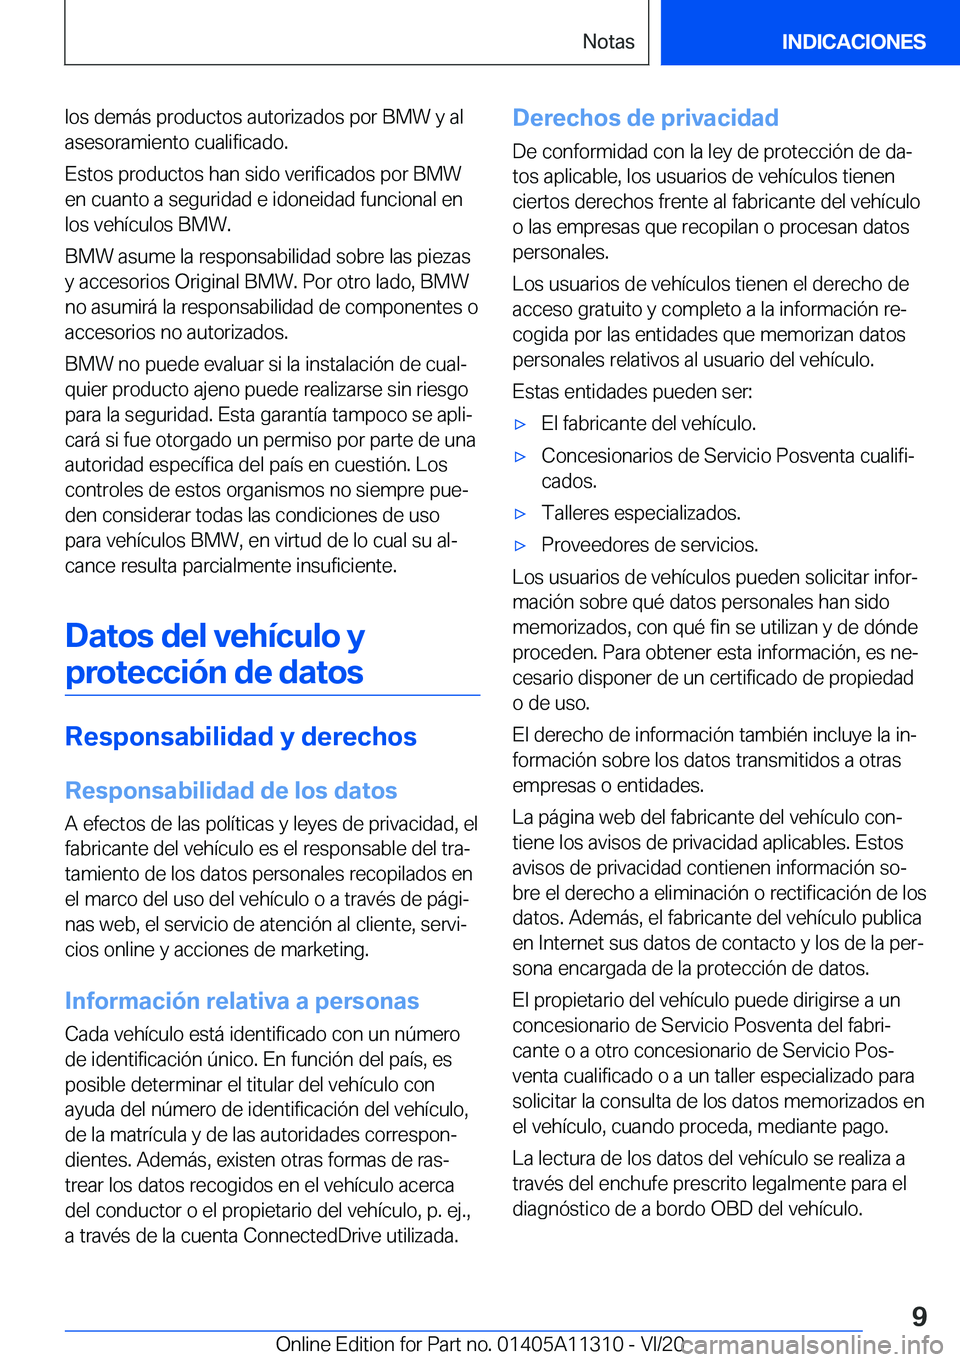 BMW 5 SERIES 2021  Manuales de Empleo (in Spanish) �l�o�s��d�e�m�